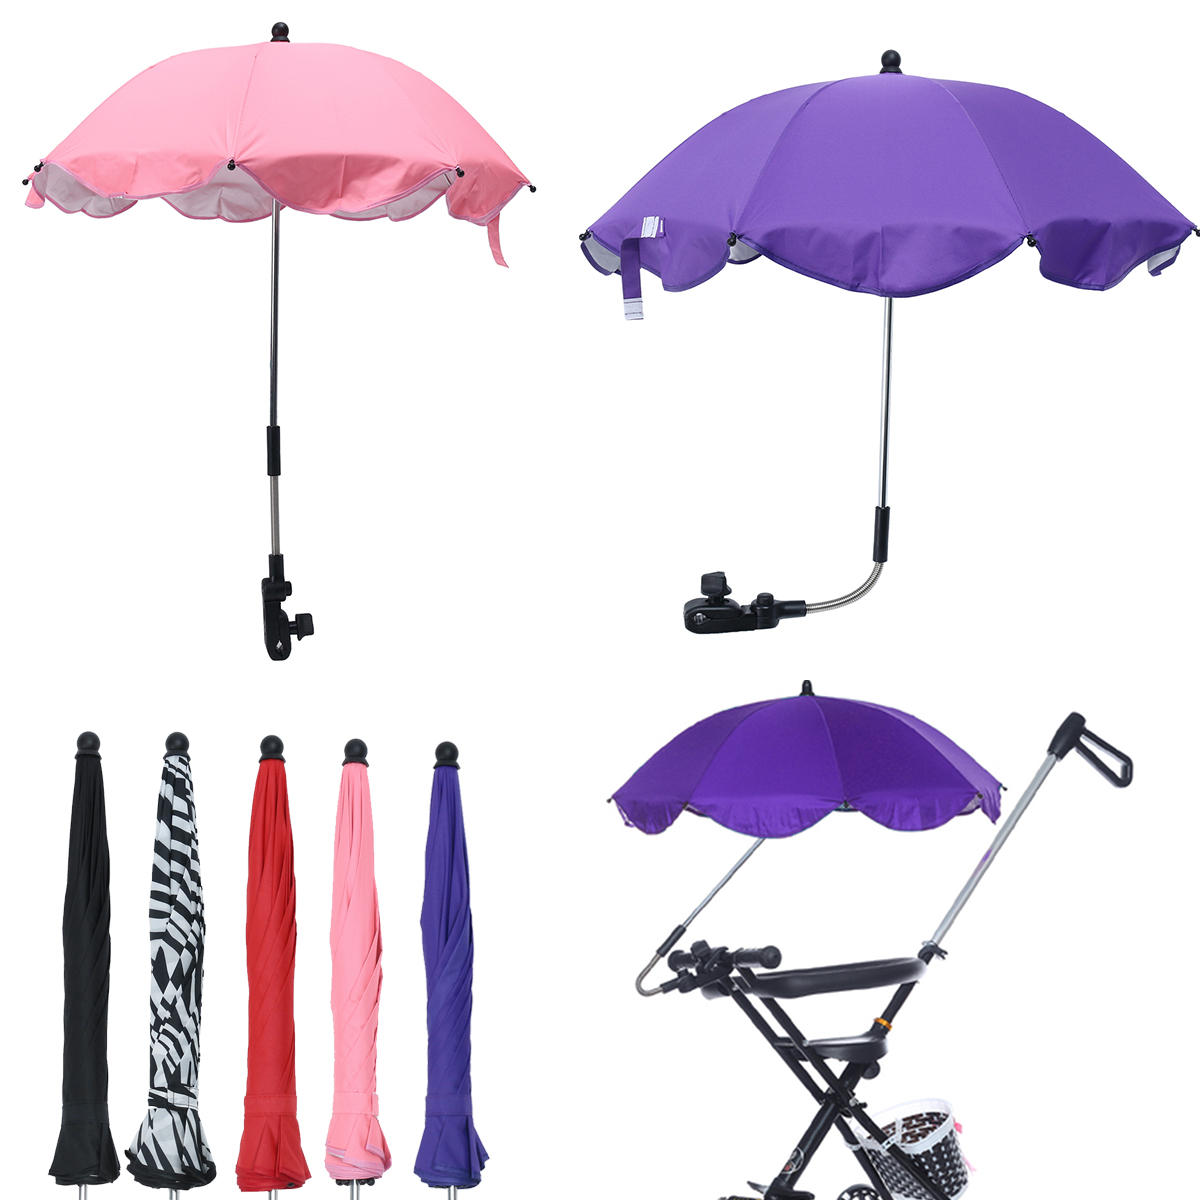 Universal Sun Rain Parasol Umbrella Baby Pram Pushchair Canopy colour New